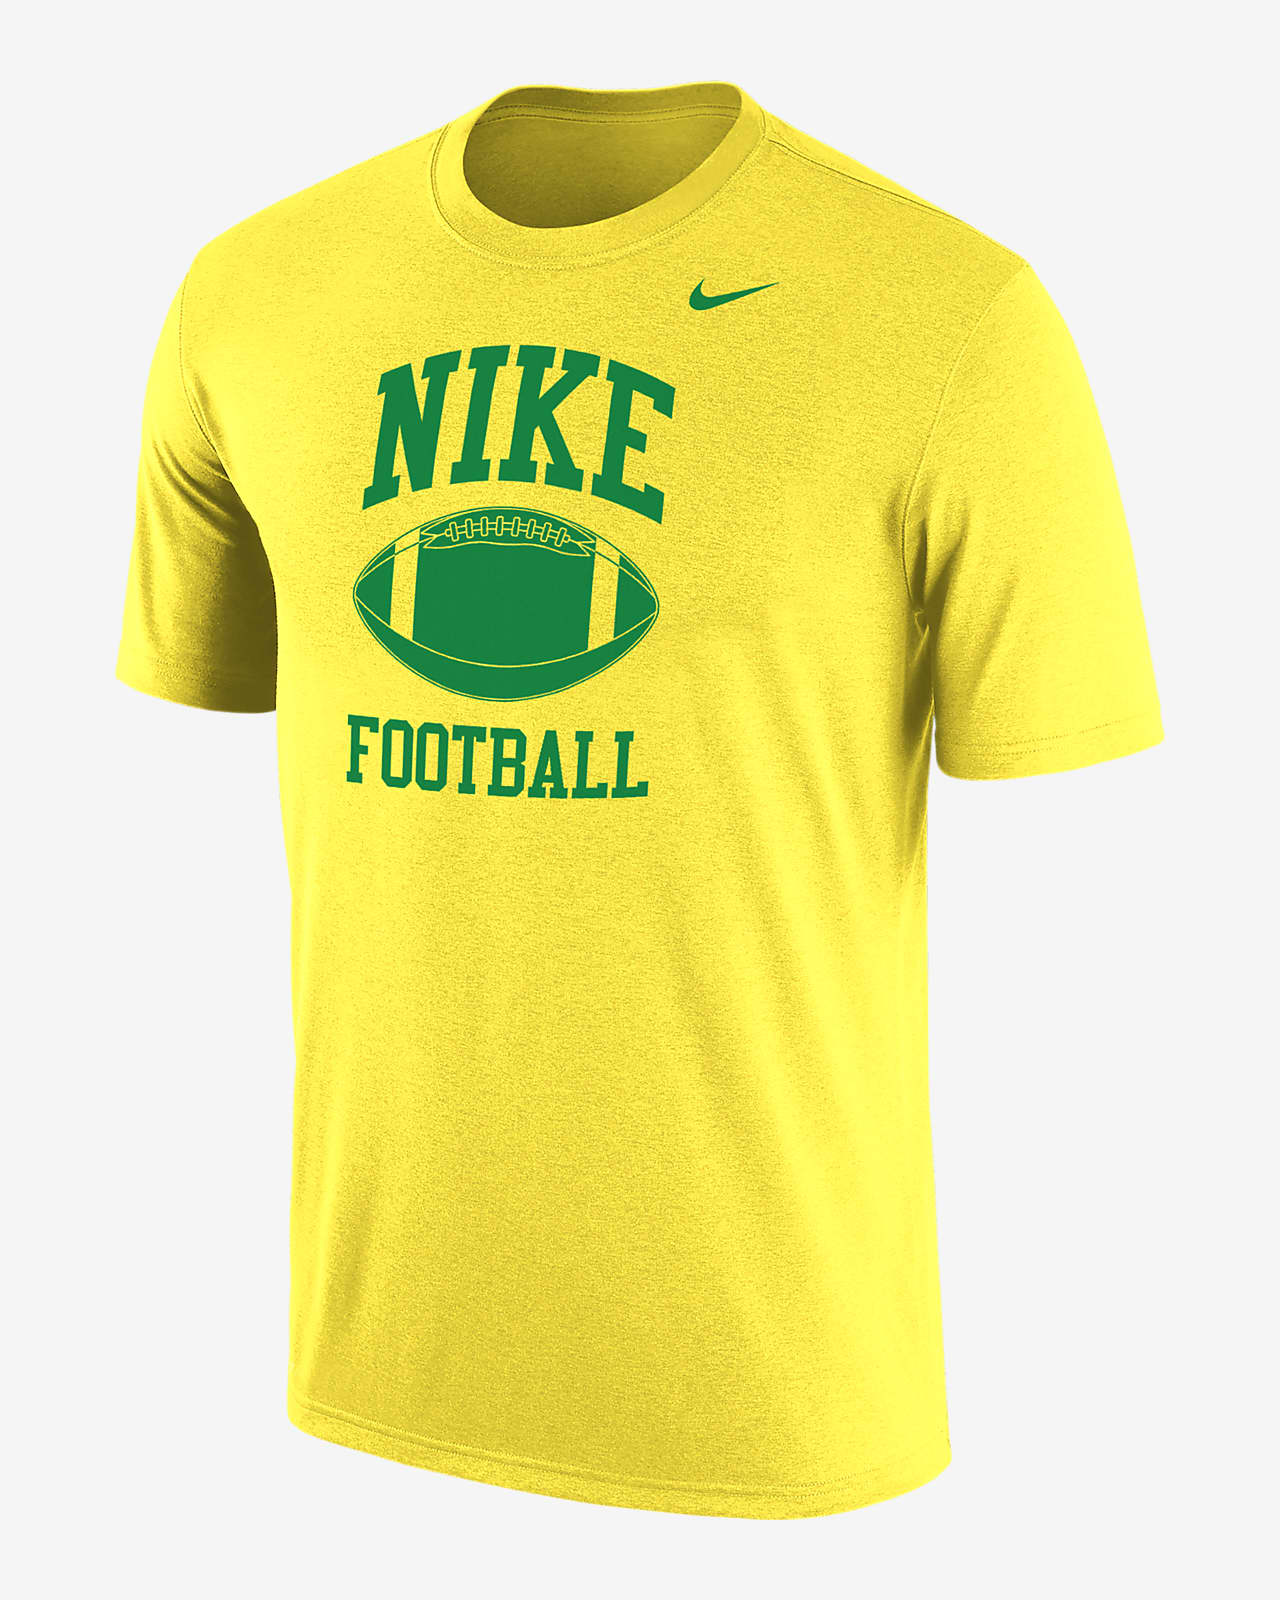 Nike Football Men's Dri-FIT T-Shirt